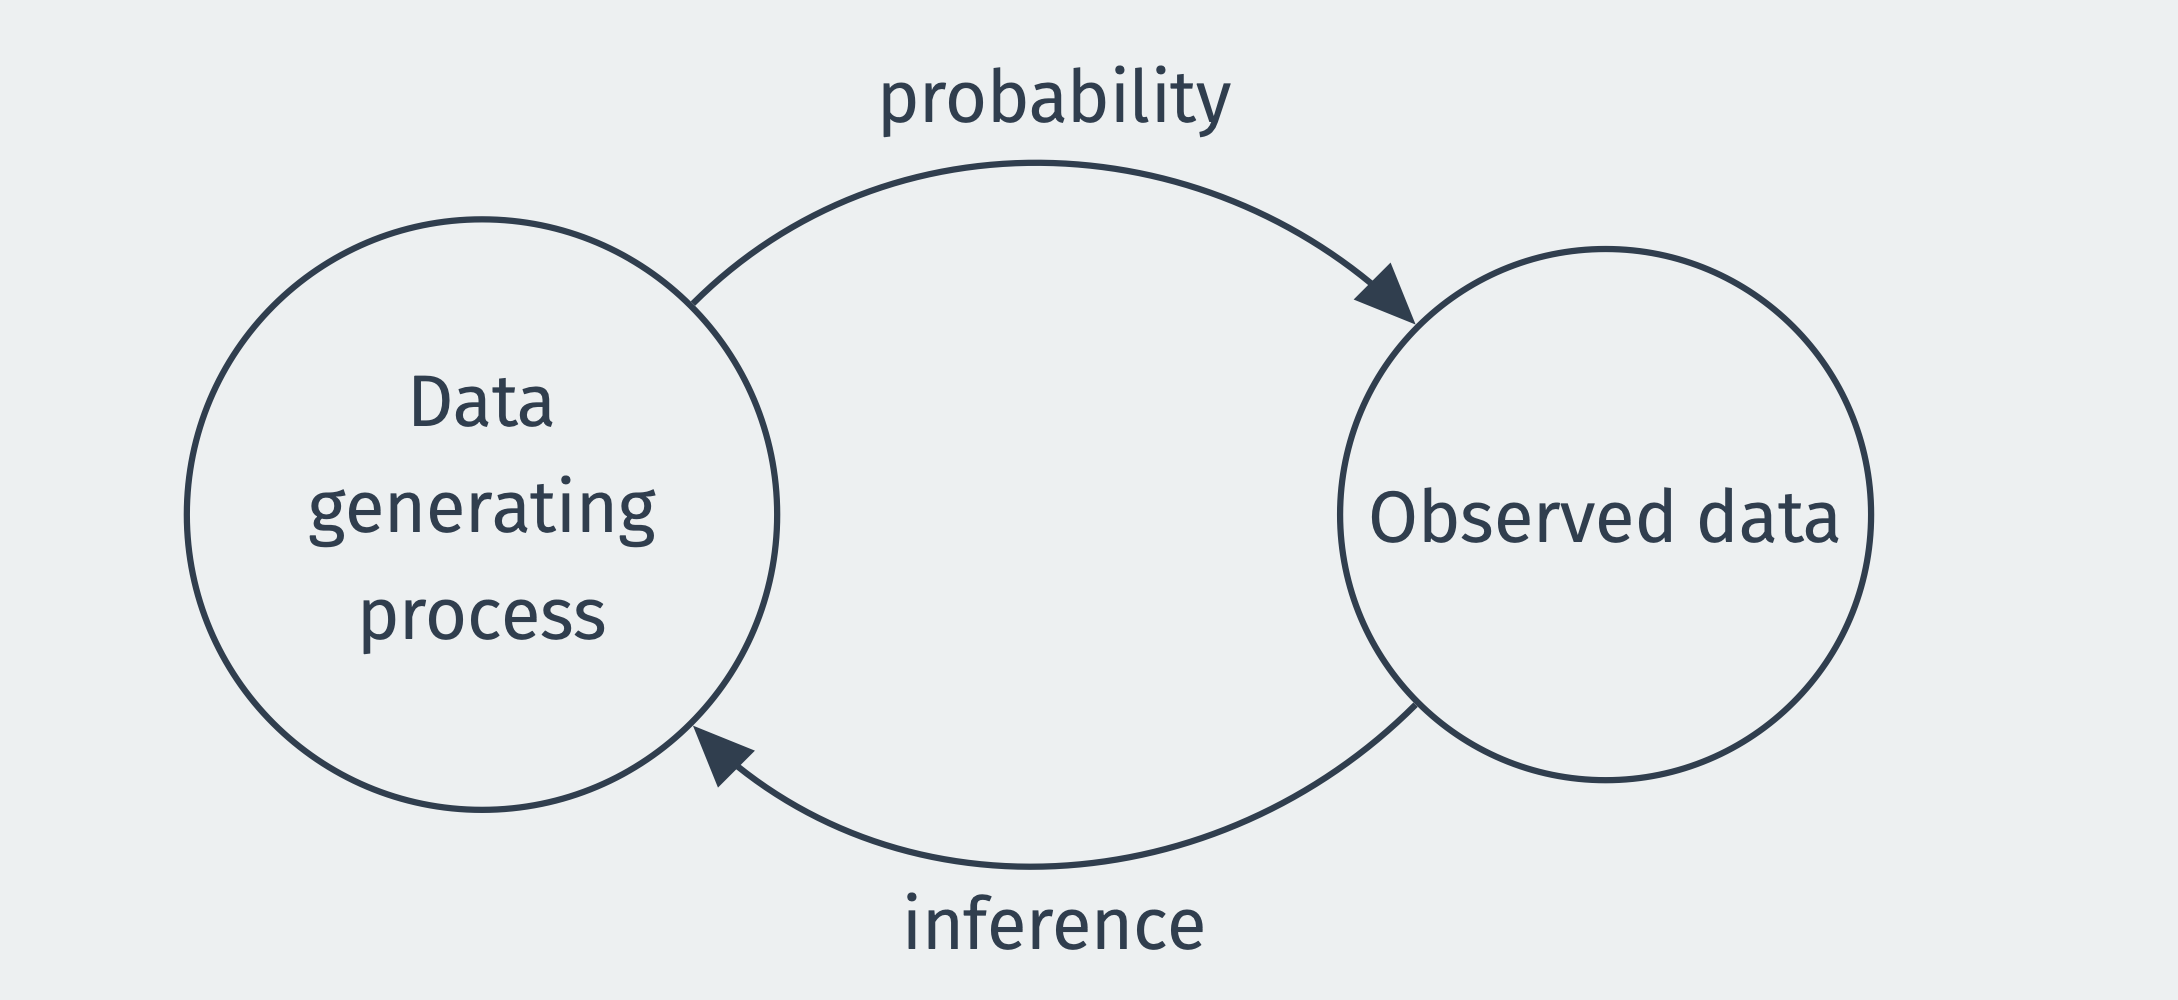 An Empirical Approach to Dice Probability – A Best-Case Scenario